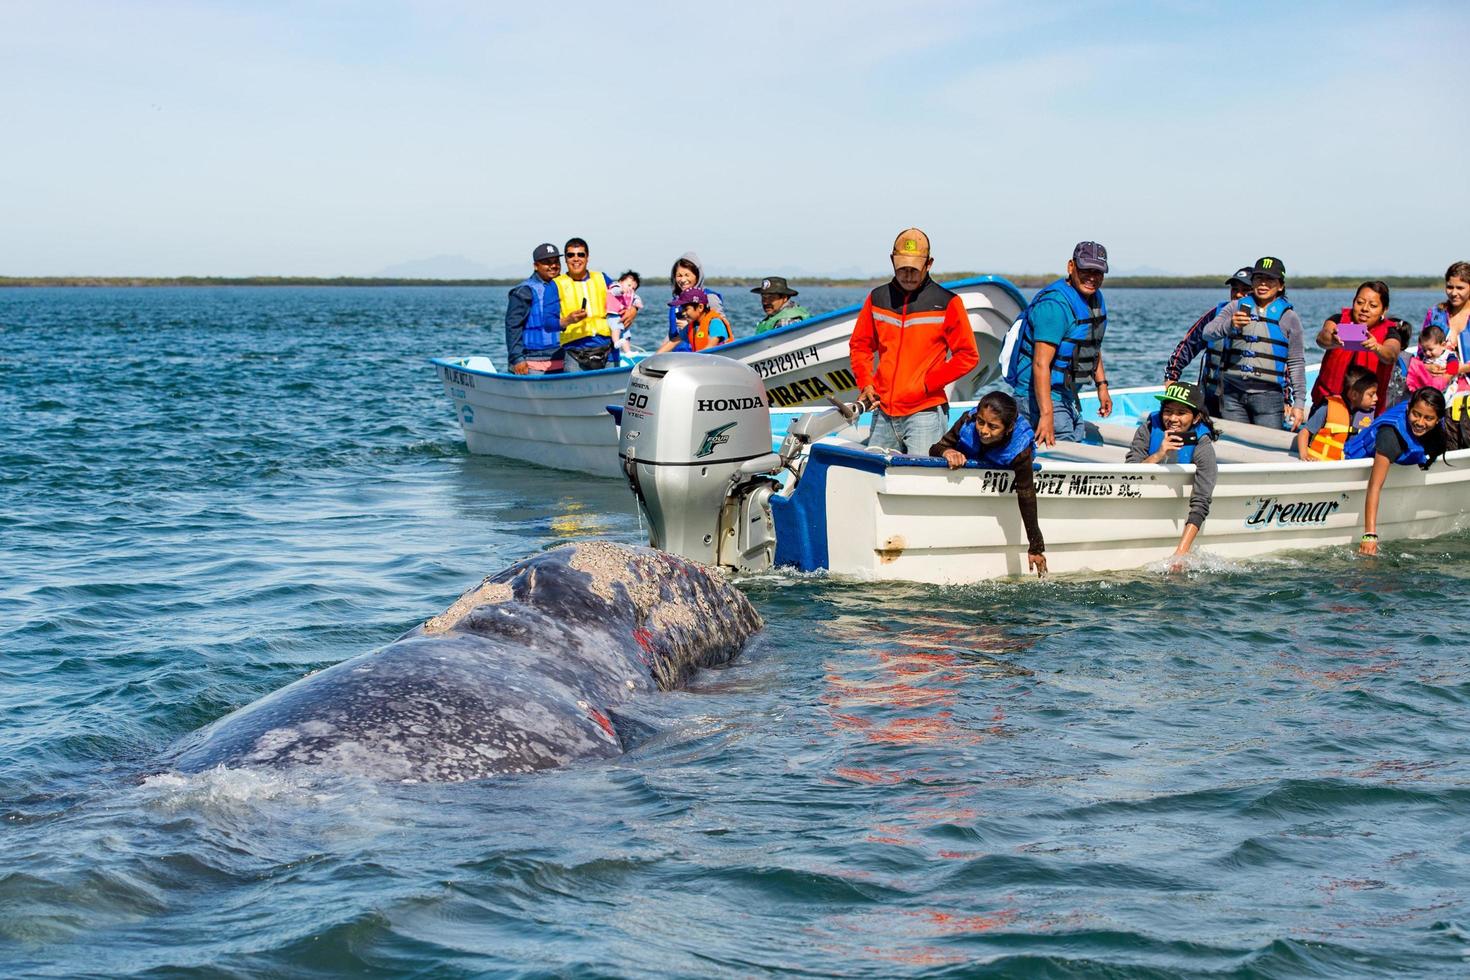 Alfredo lopez mateos - Mexico - februari, 5 2015 - grijs walvis naderen een boot foto